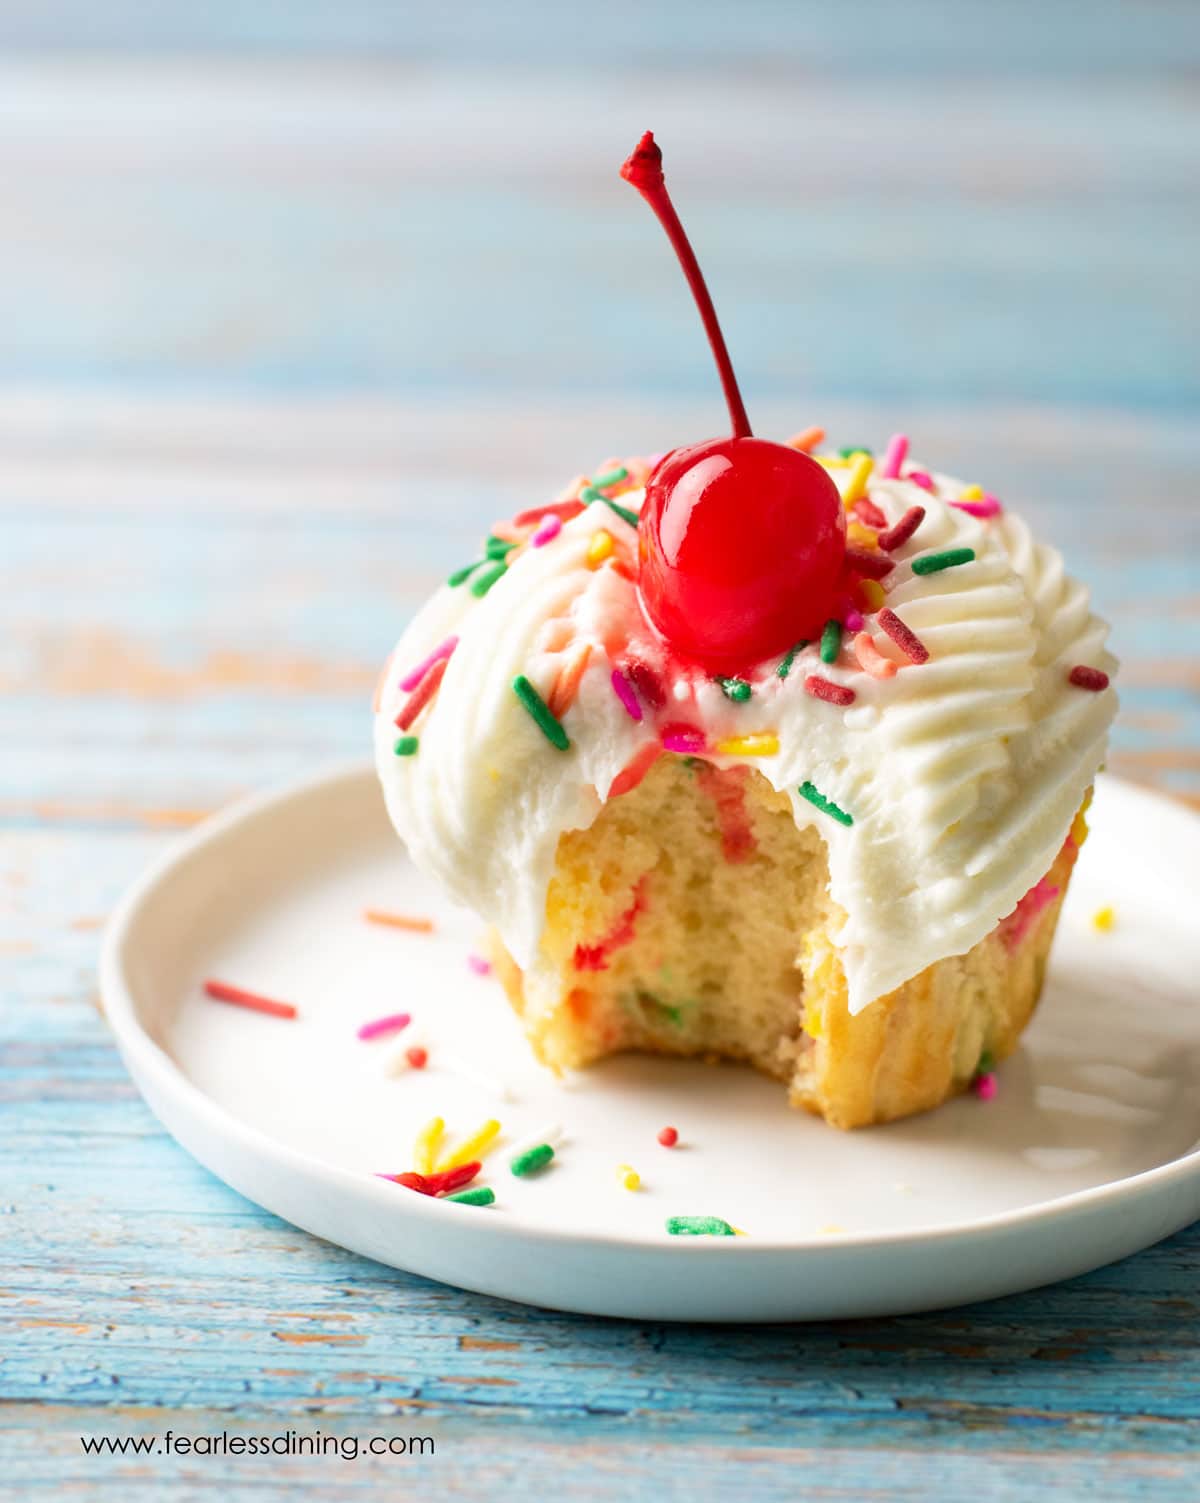 A funfetti cupcake with a bite taken out.